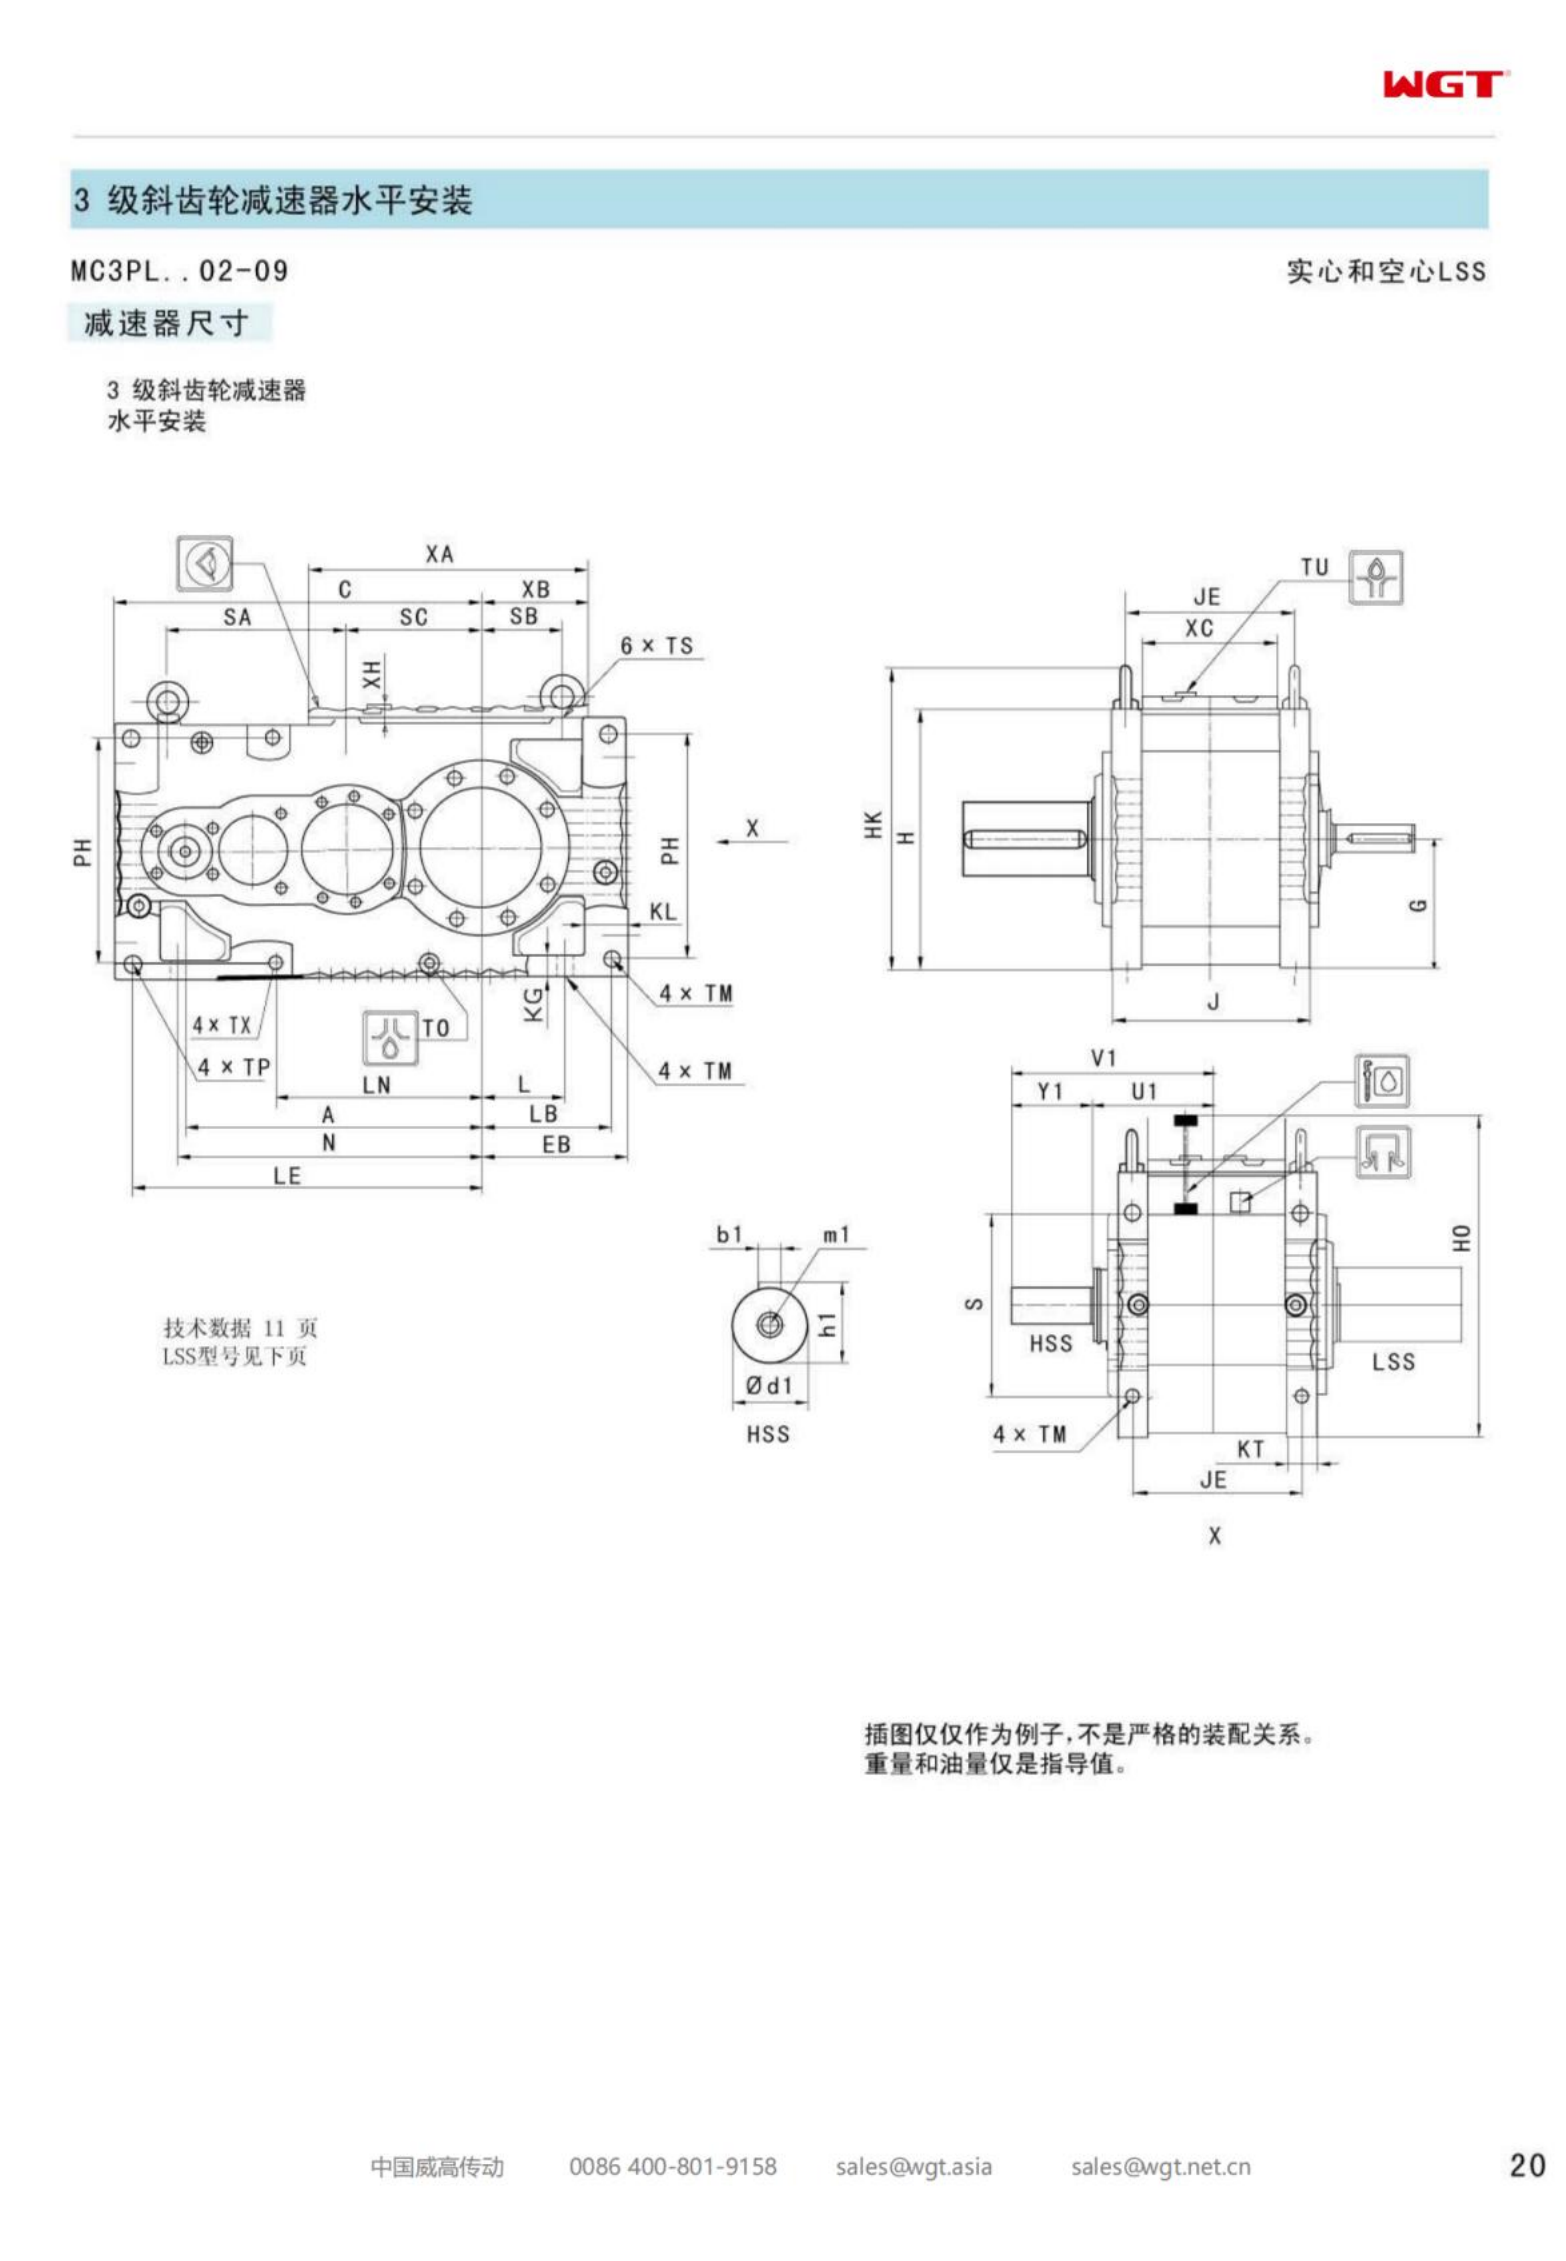 MC3PLHT06 replaces _SEW_MC_Series gearbox (patent)